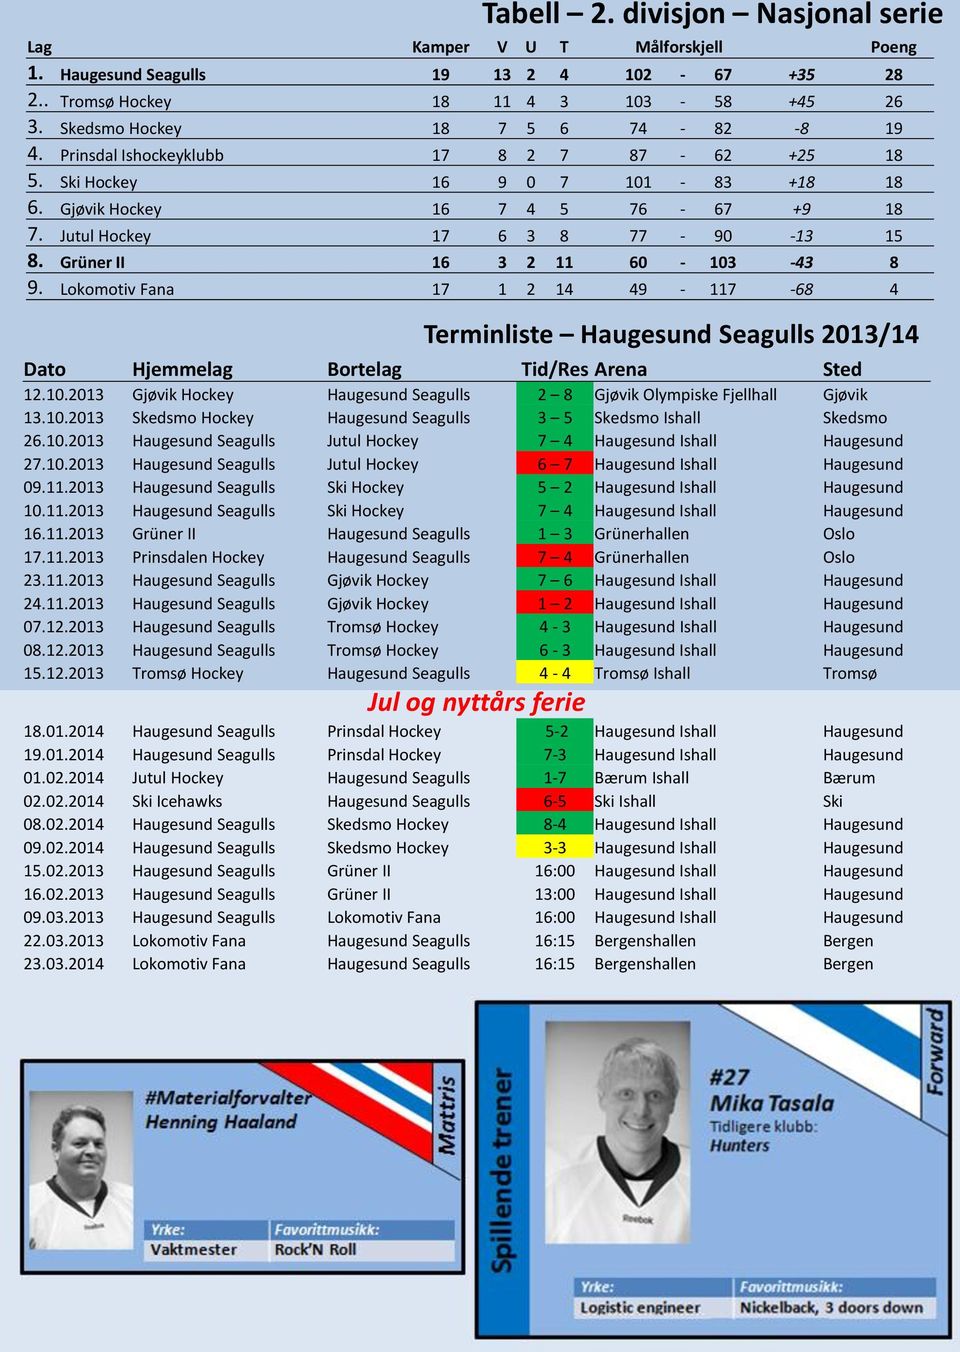 Lokomotiv Fana 17 1 2 14 49-117 -68 4 Terminliste Haugesund Seagulls 2013/14 Dato Hjemmelag Bortelag Tid/Res Arena Sted 12.10.